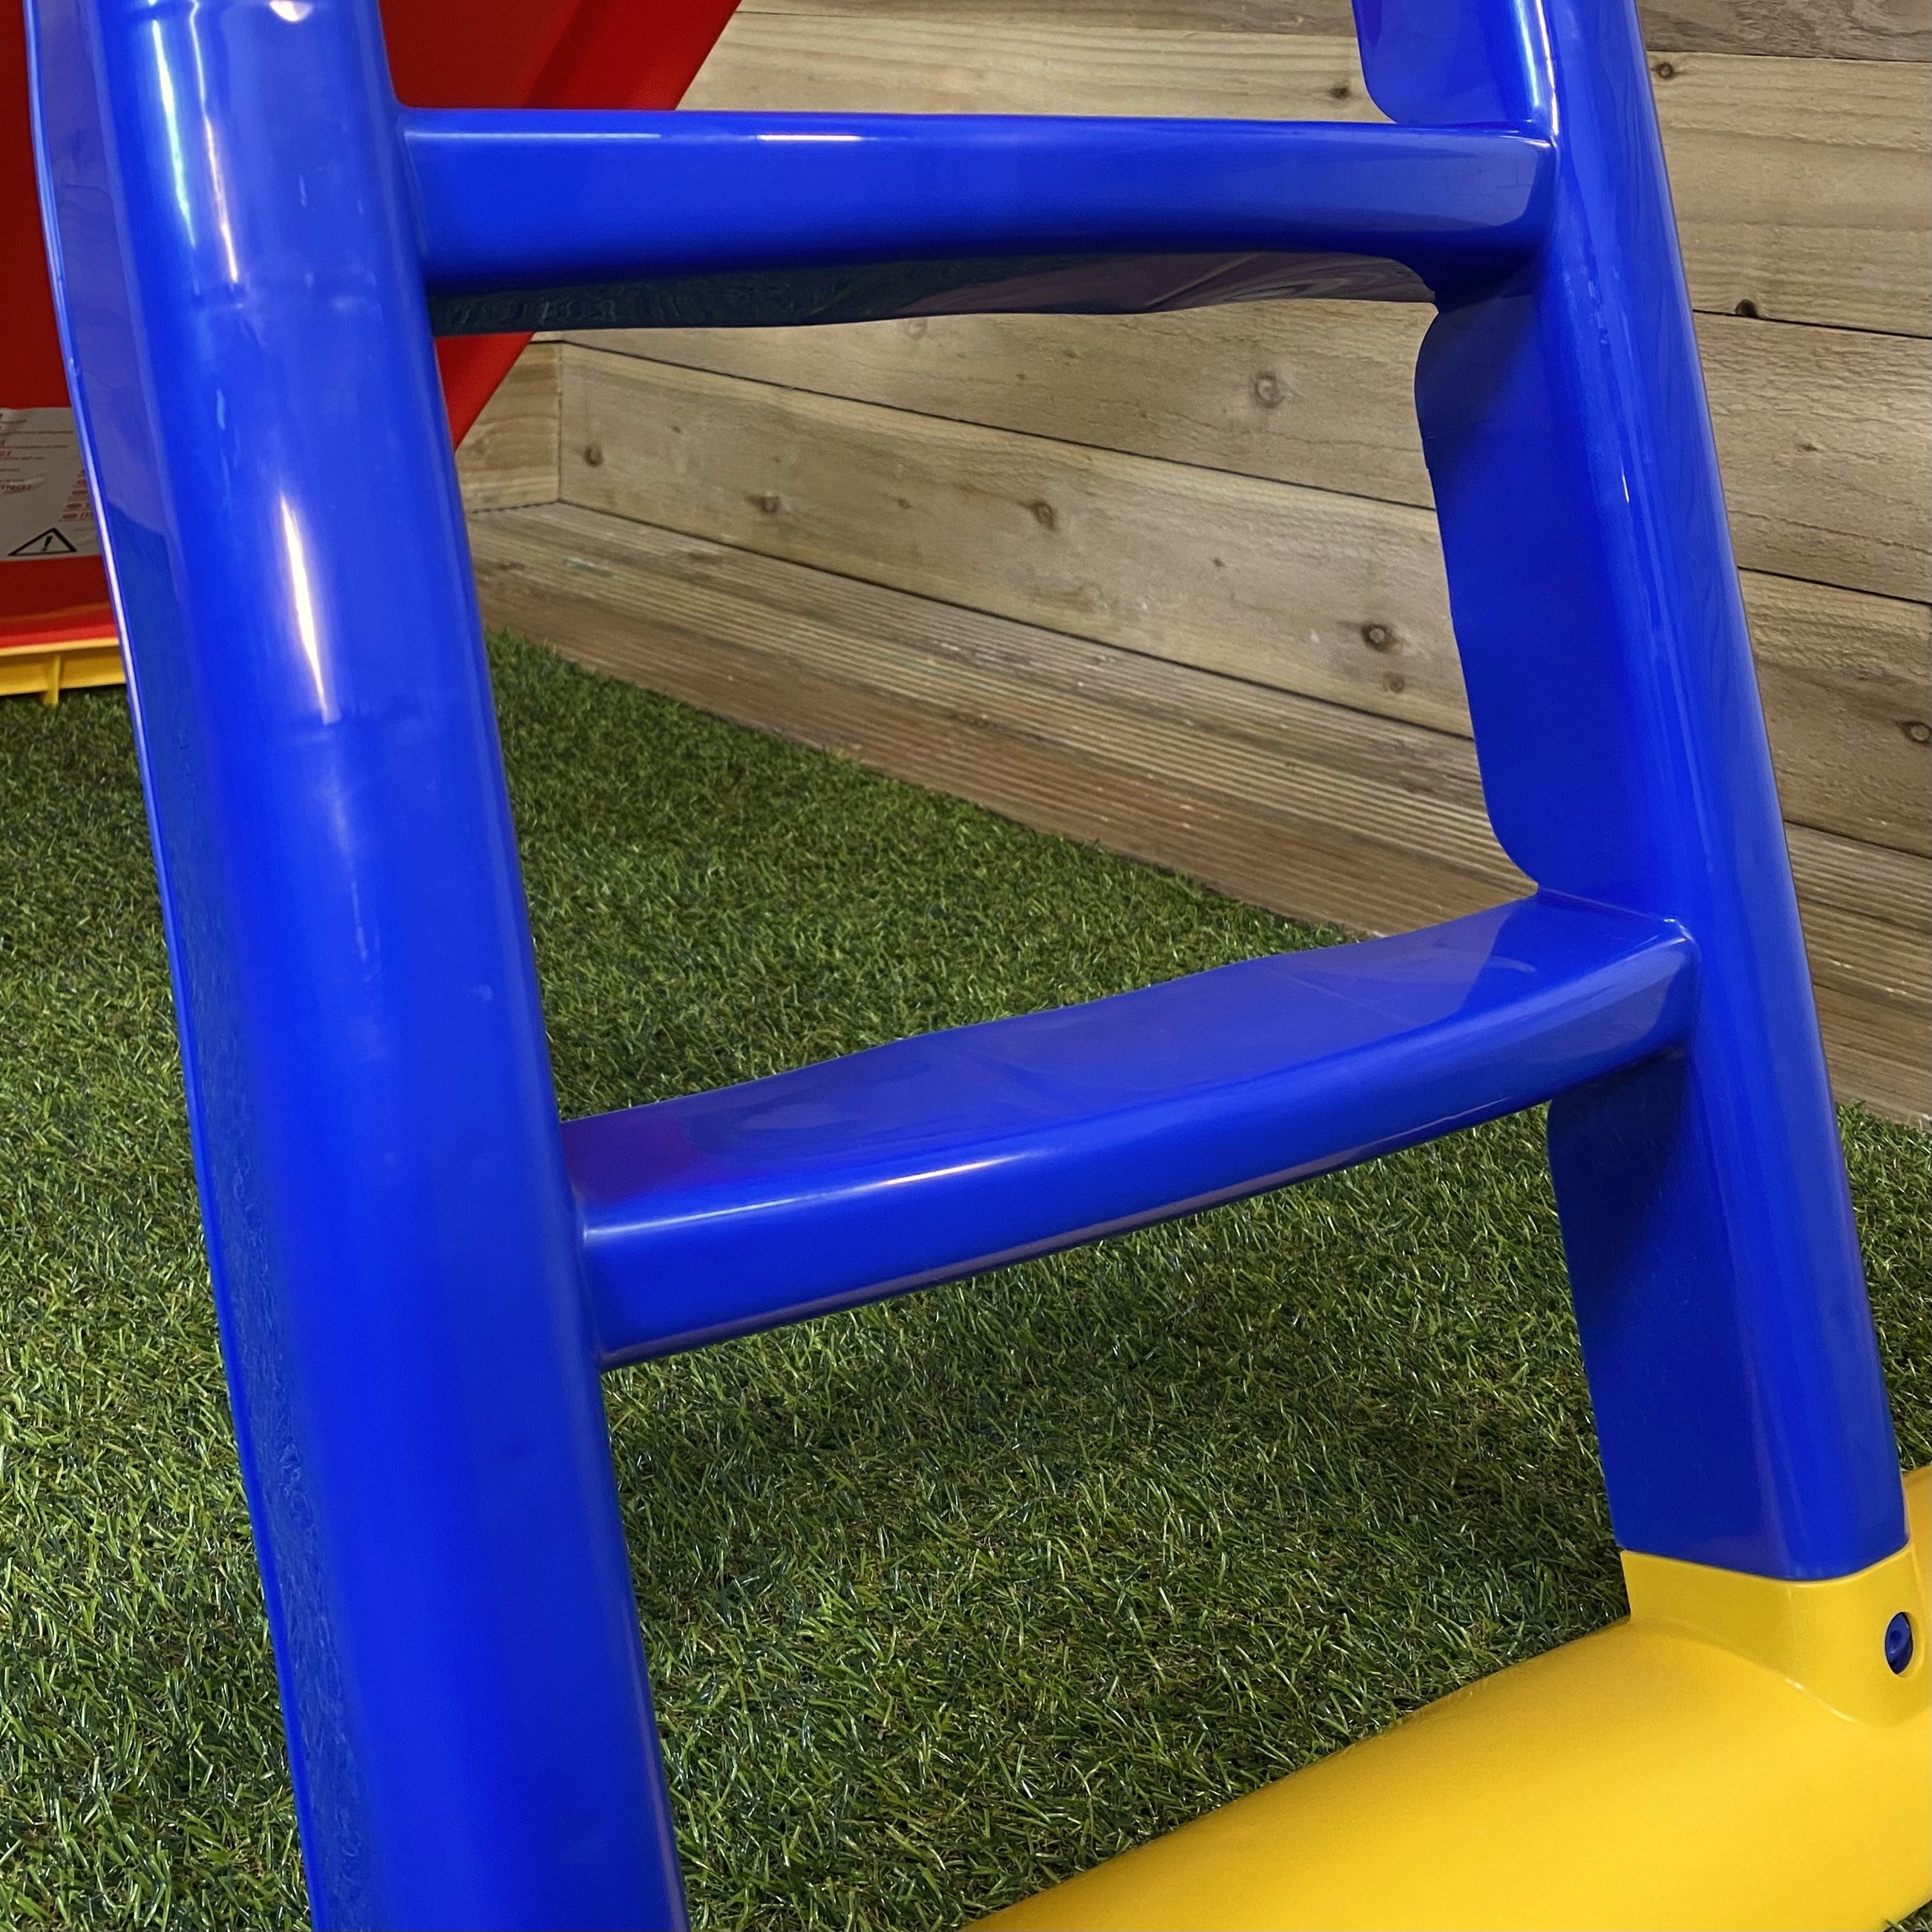 80cm Kids Indoor Outdoor Freestanding Plastic Slide with Ladder and Extension